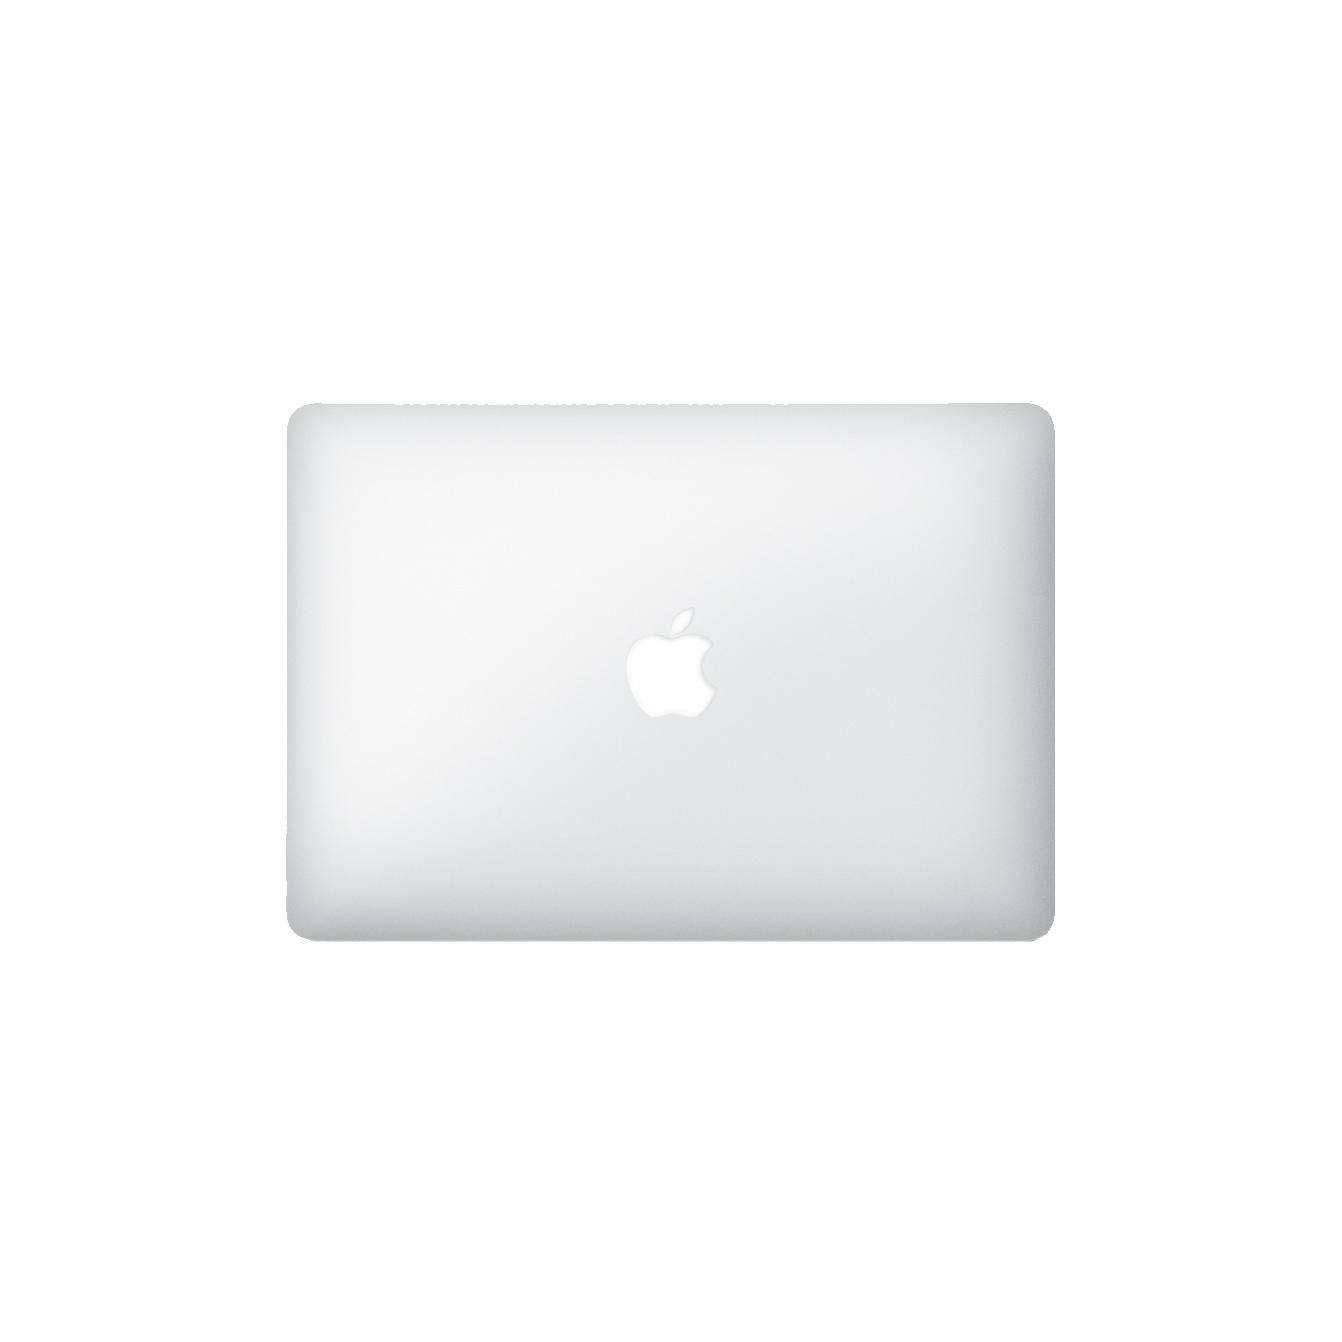 Refurbished MacBook Air 13" Dual Core i5 1.6 Ghz 4gb 256gb